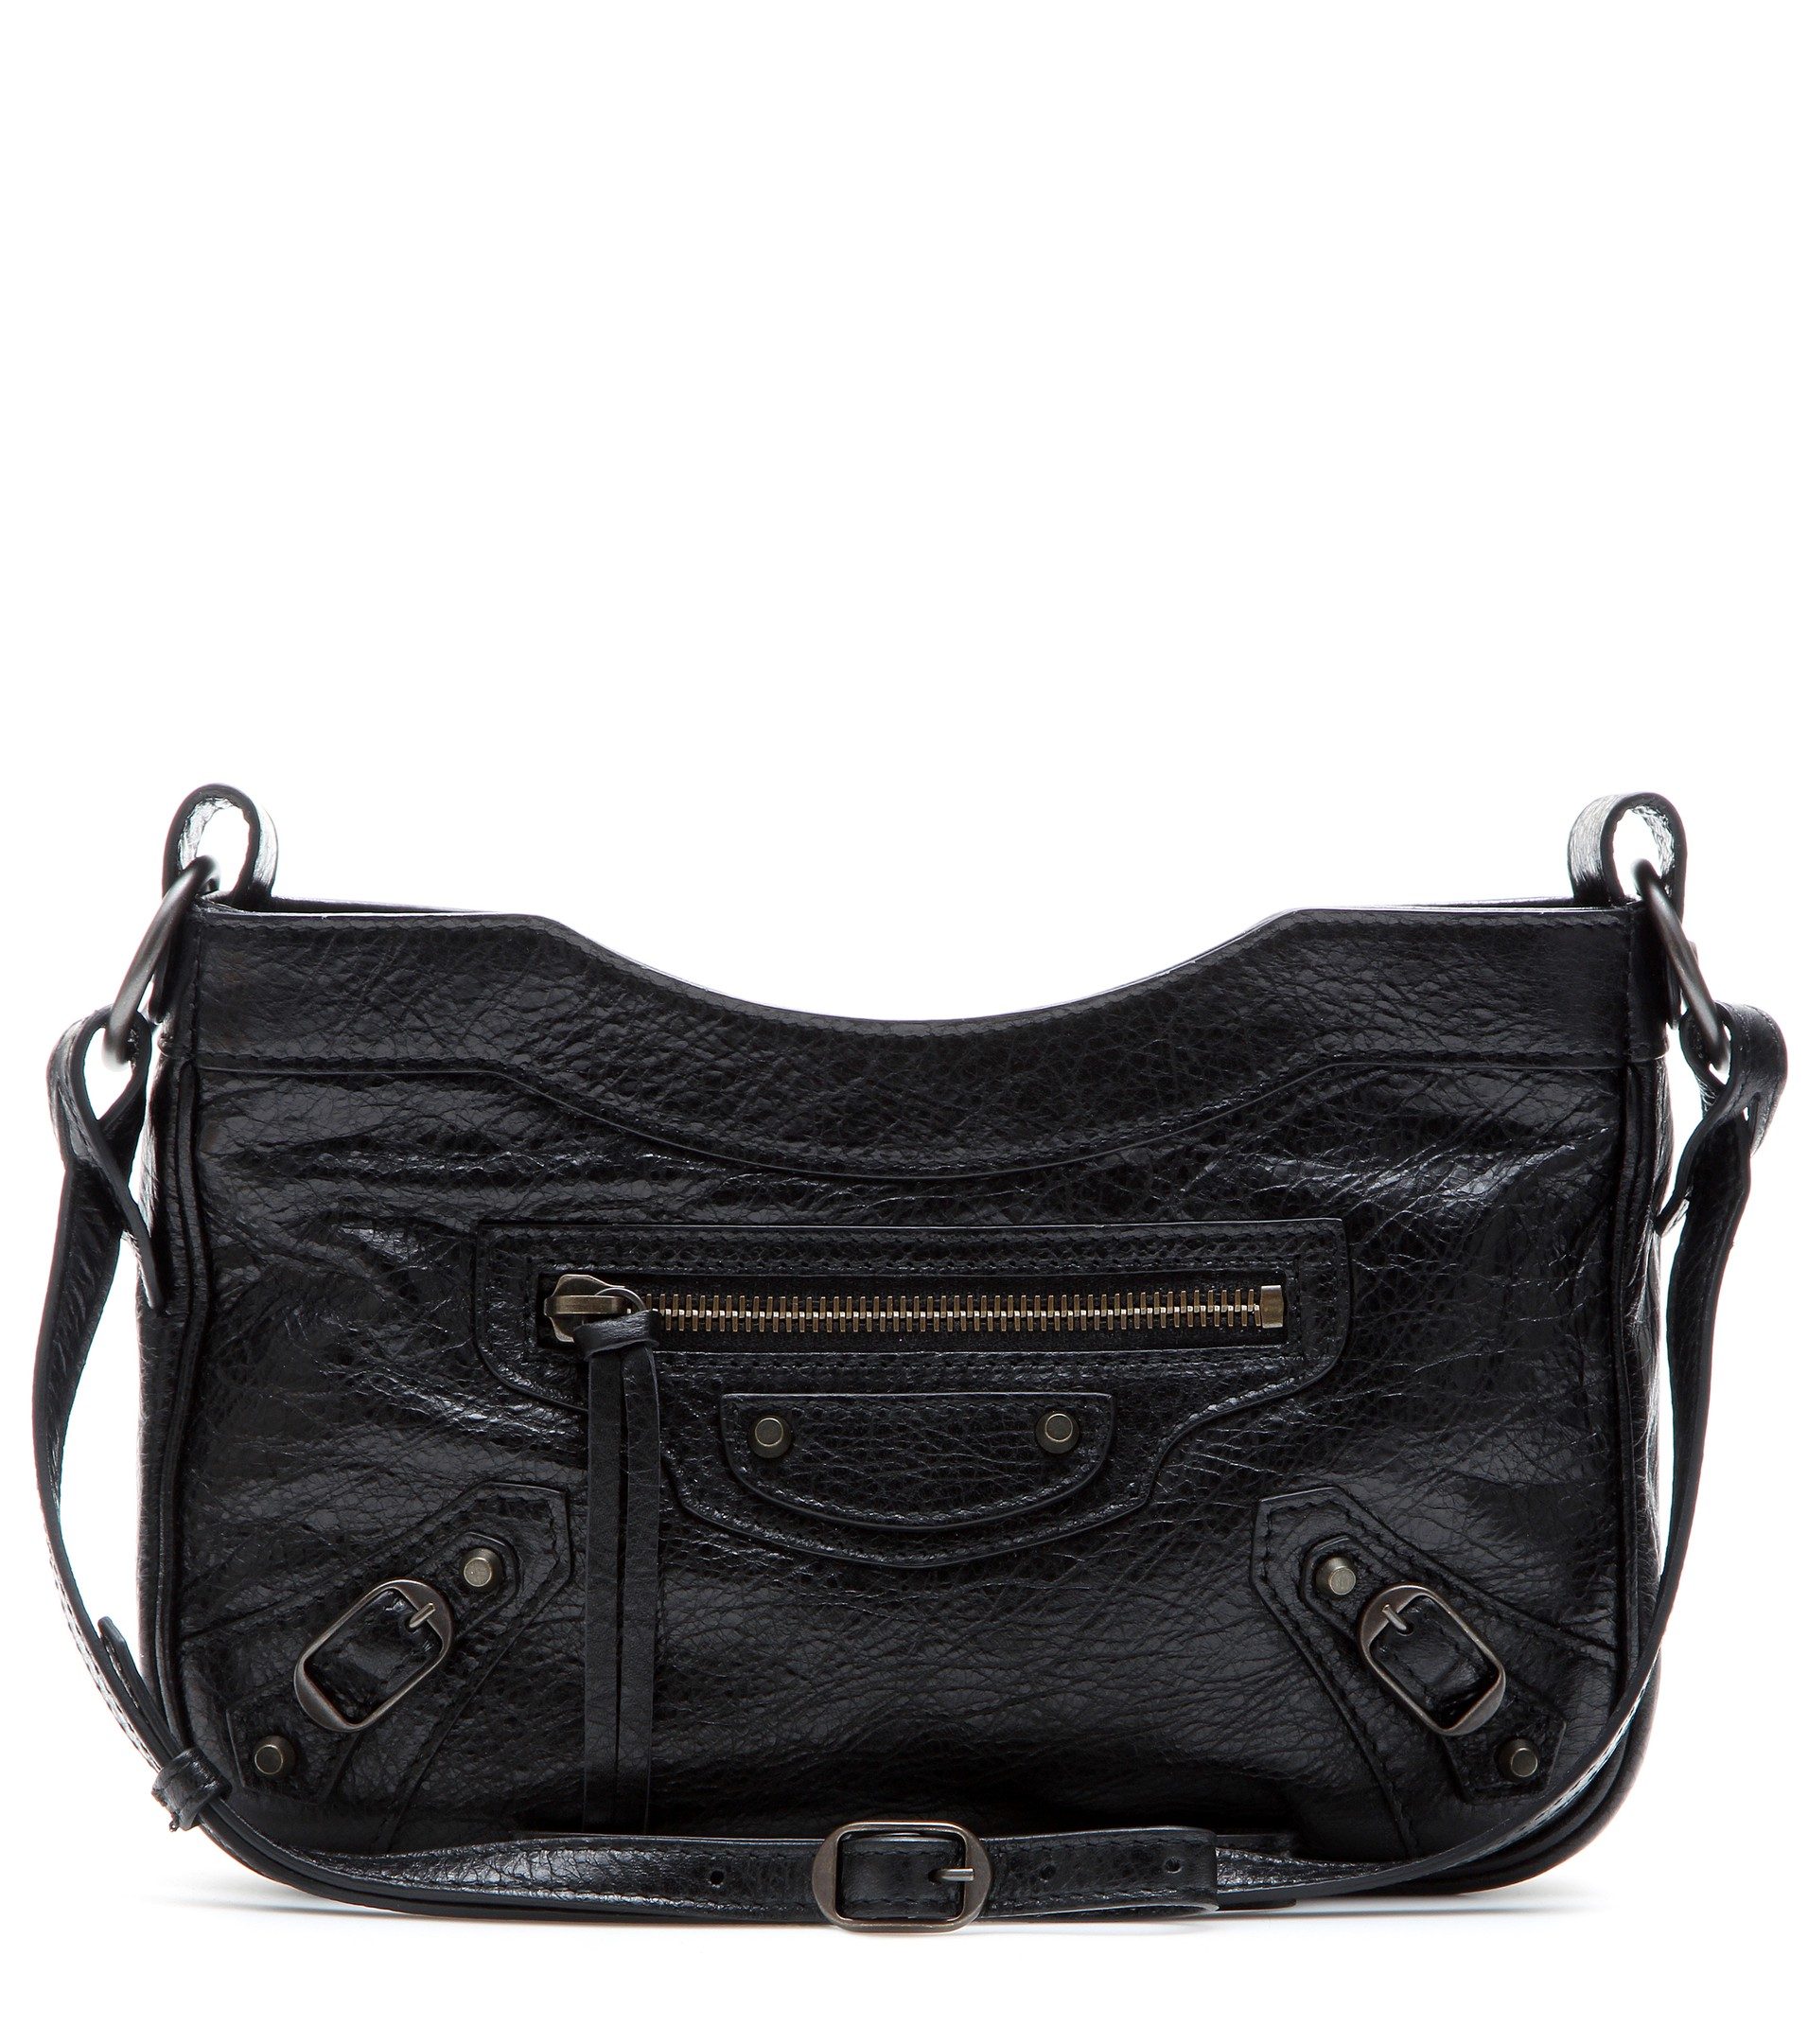 Balenciaga Classic Hip Leather Shoulder Bag in Nero (Black) - Lyst